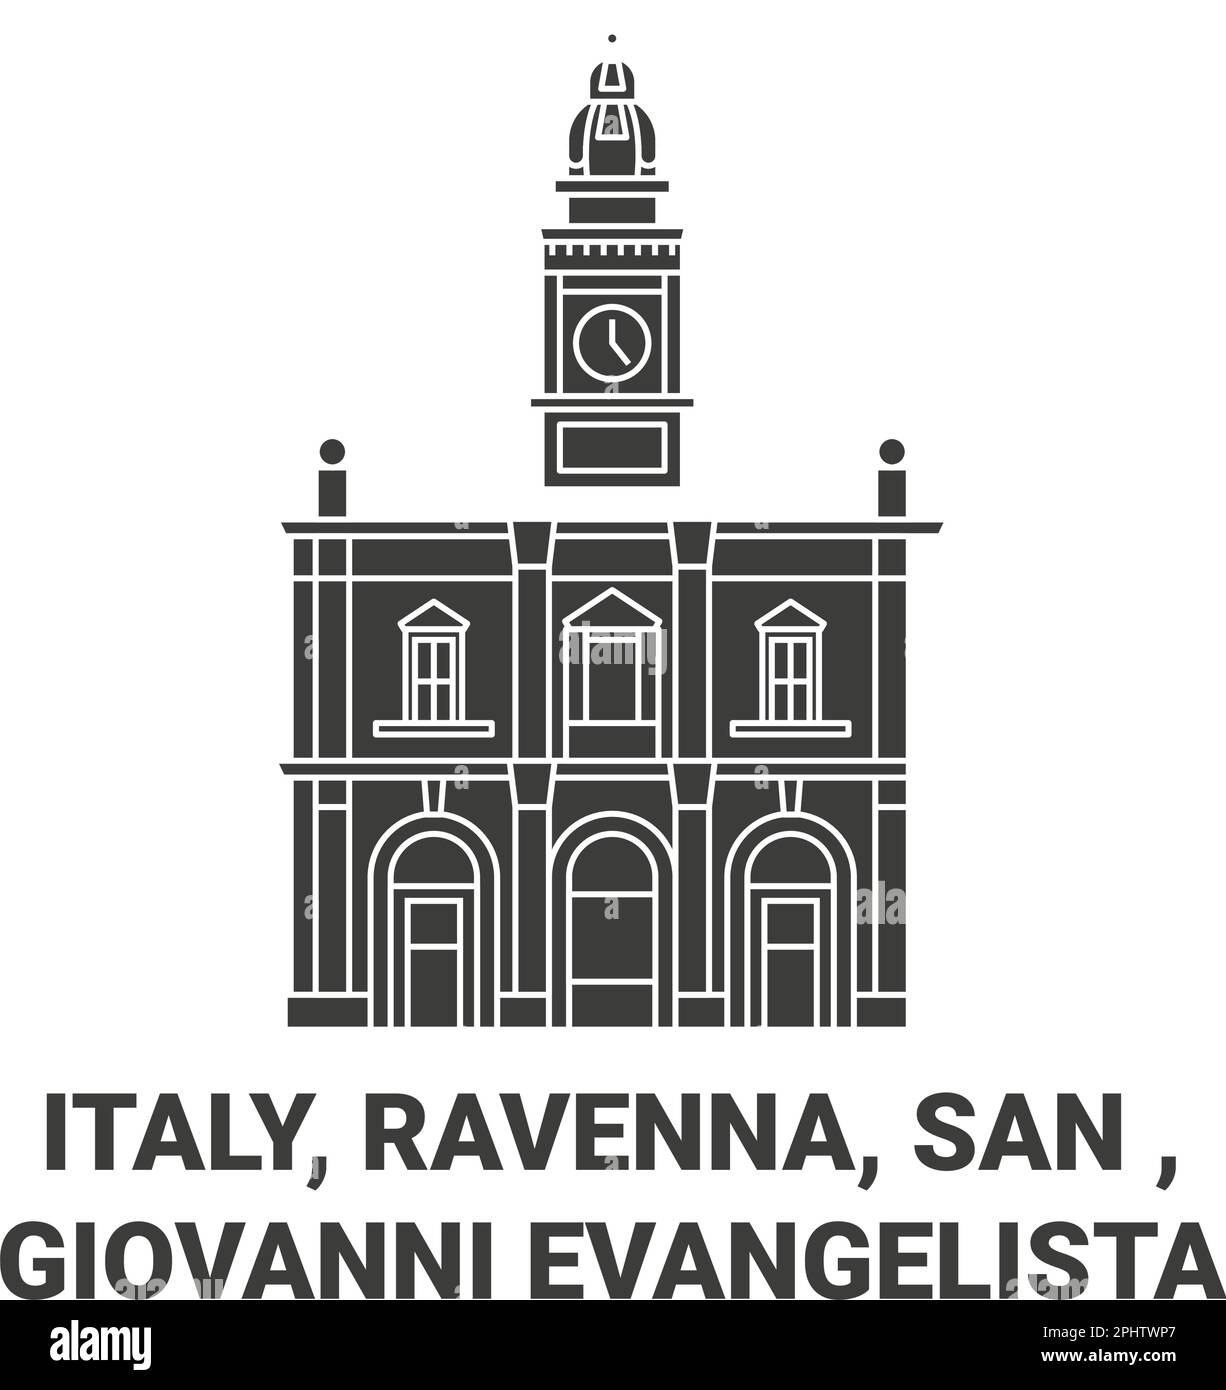 Italien, Ravenna, San, Giovanni Evangelista Reise Landmark Vektordarstellung Stock Vektor